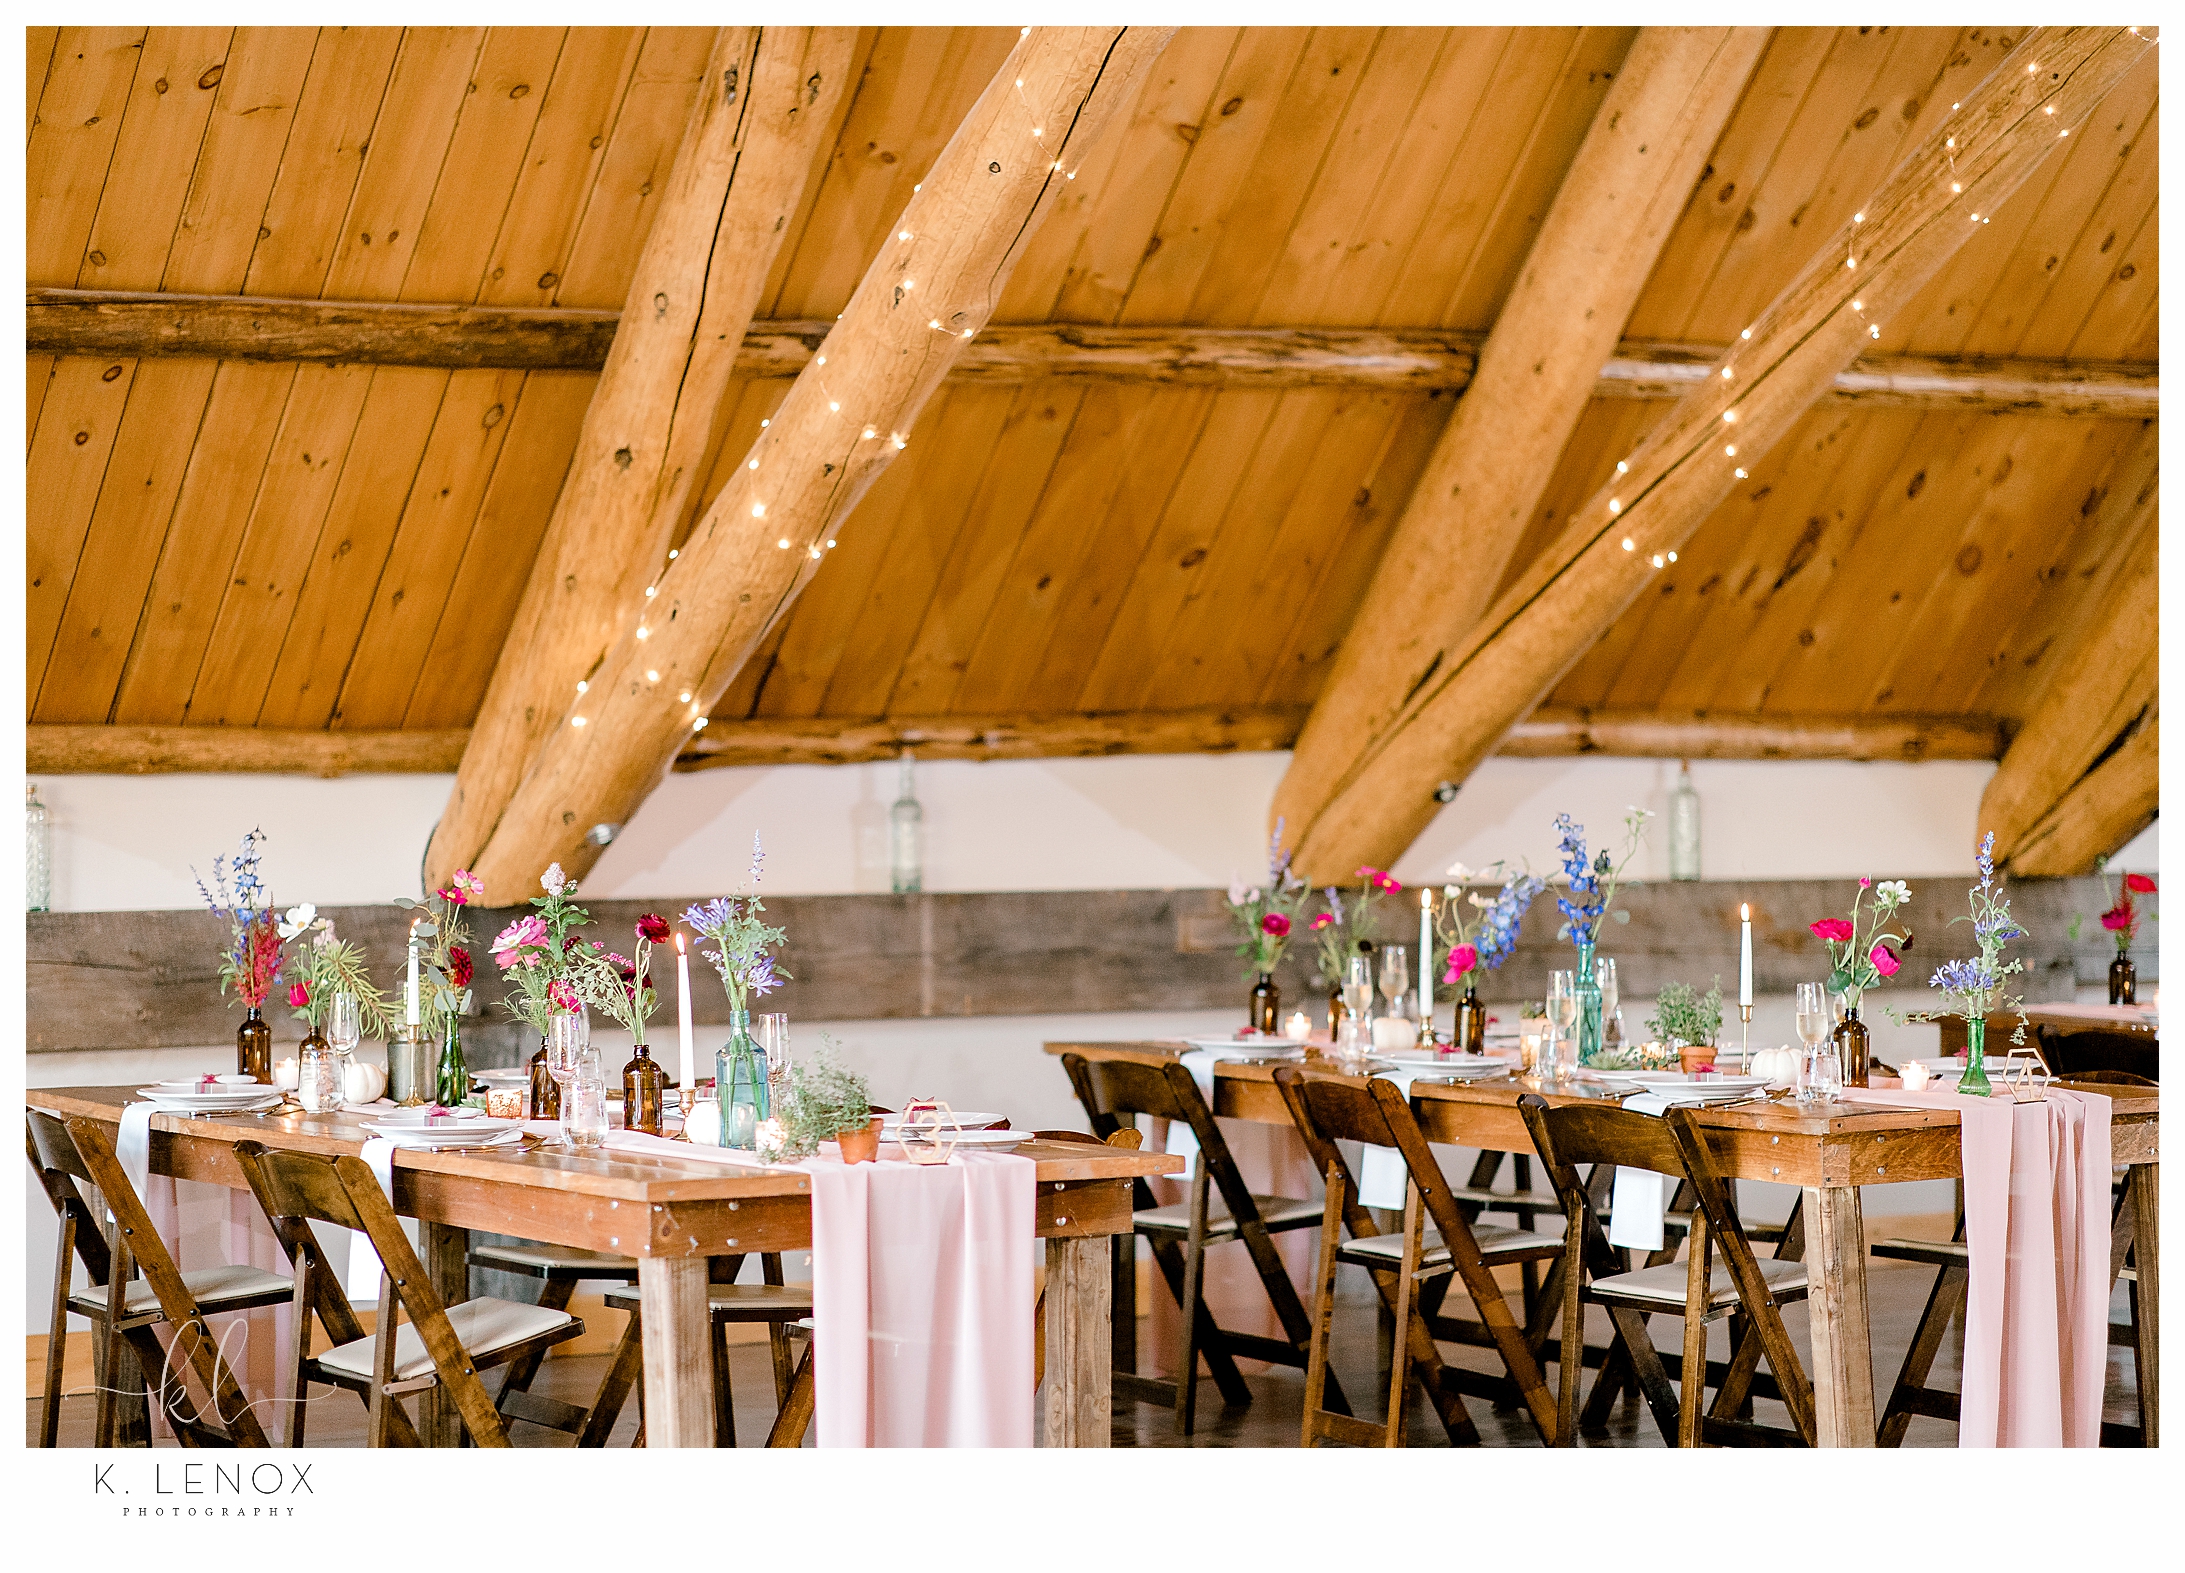 Wedding at Lake Falls Lodge- Barn table scape